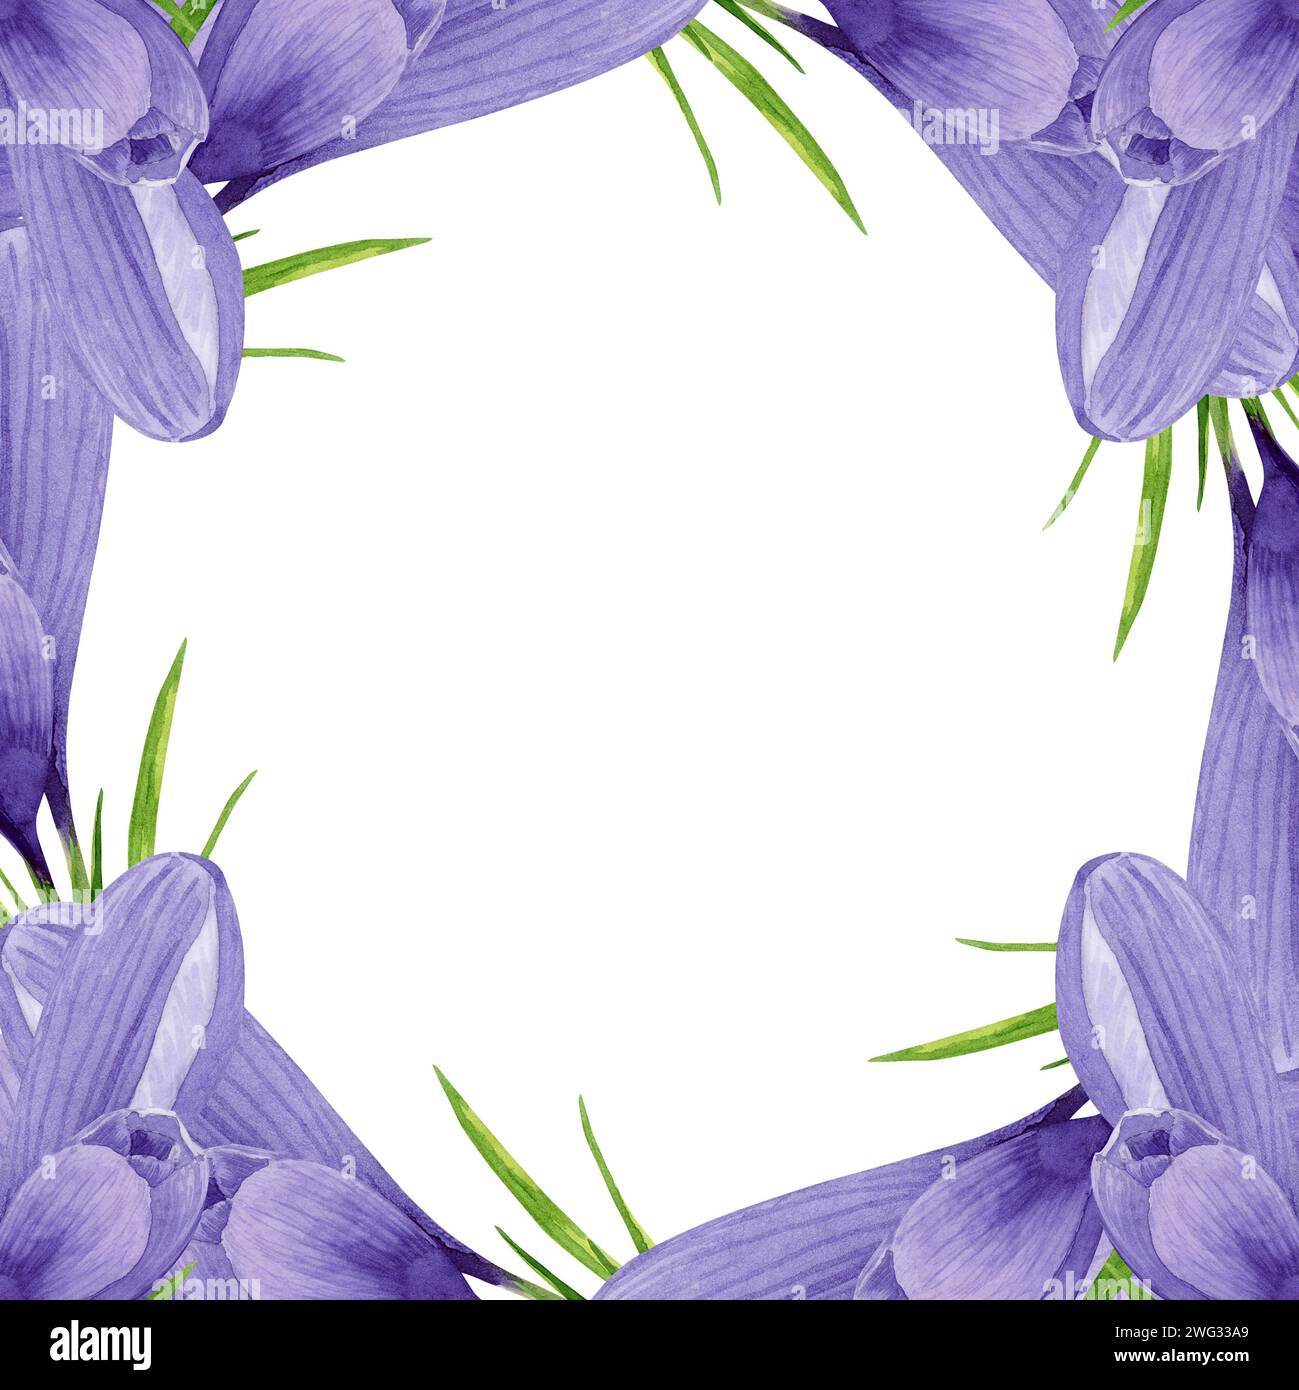 Watercolor purple crocuses frame, spring flowers arrangement. Hand painted watercolor floral illustration. Design element for label, logo, packaging, Stock Photo